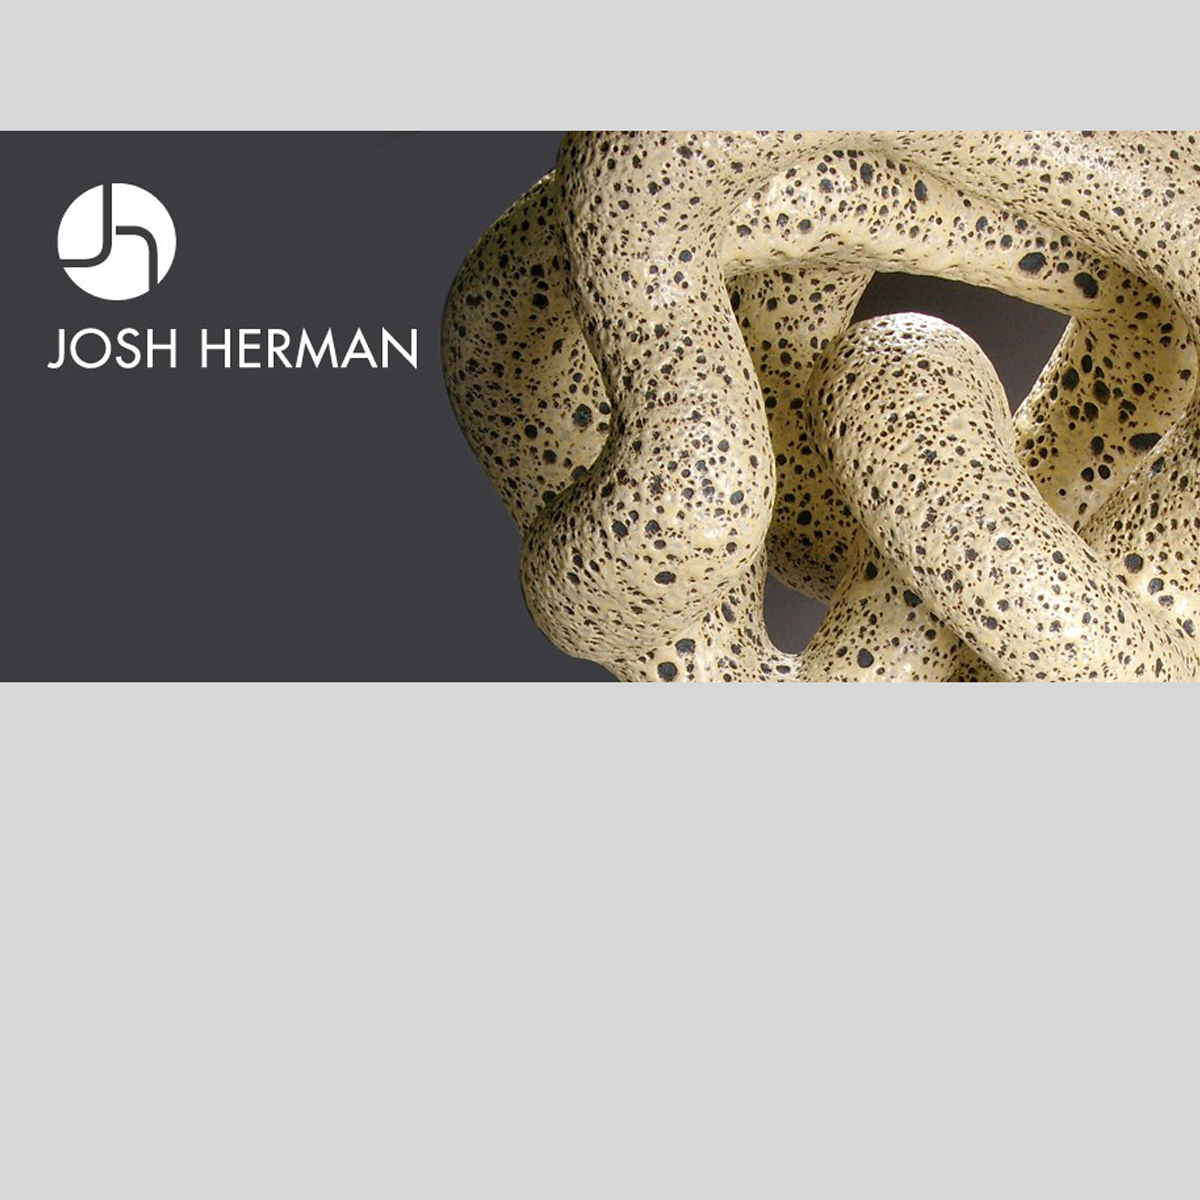 Josh Herman